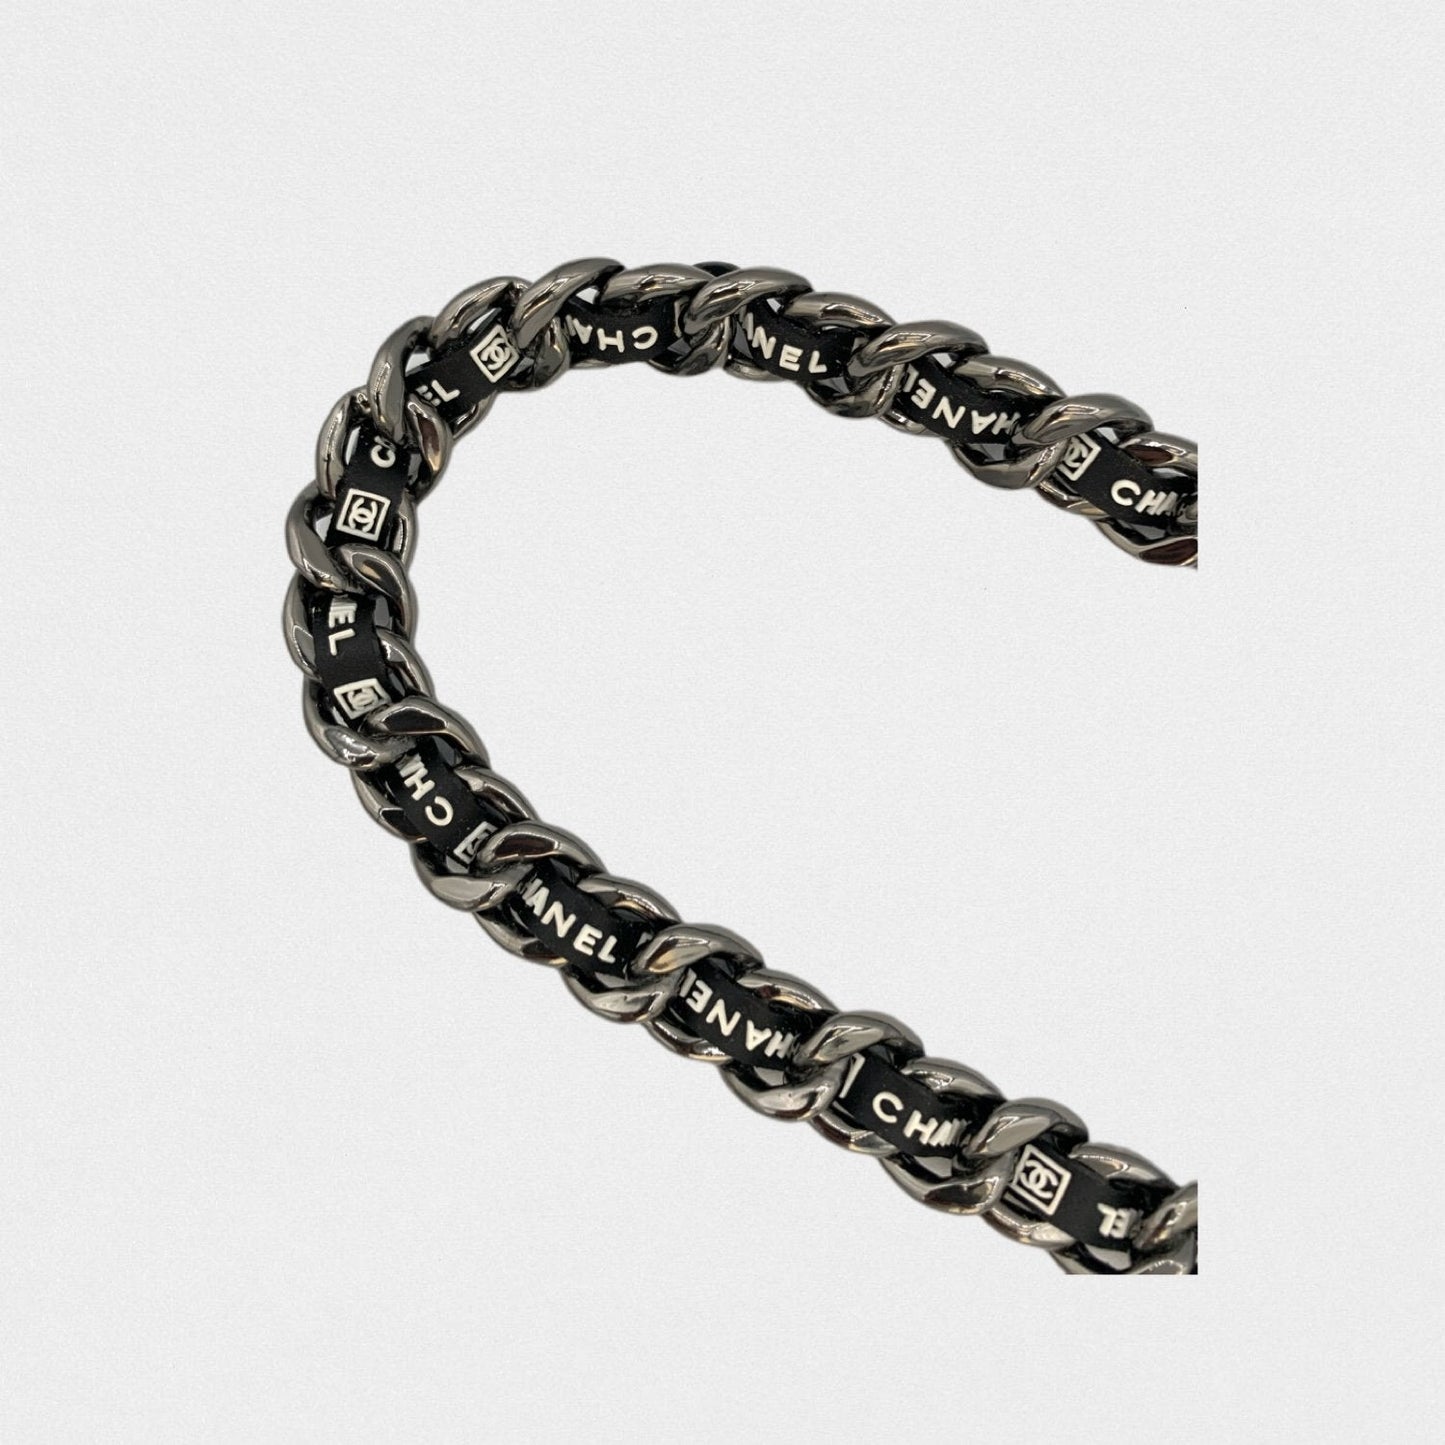 Lysis vintage "Chanel ""Ecriture"" chain belt - 2010s"